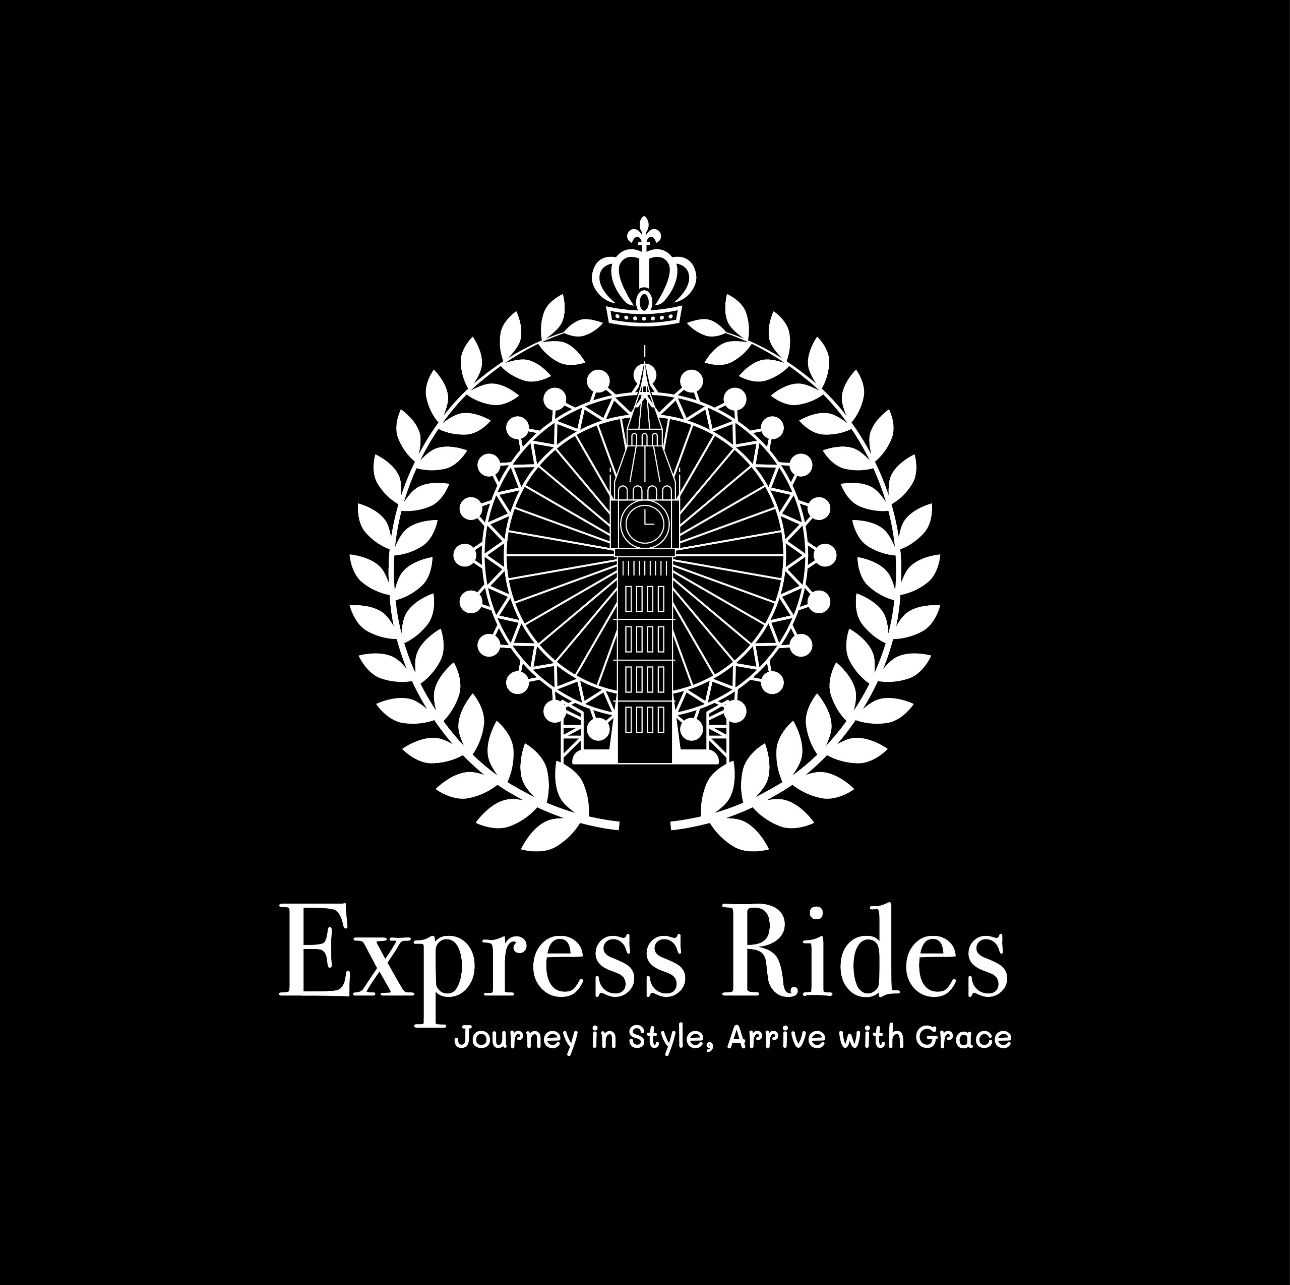 Express Rides